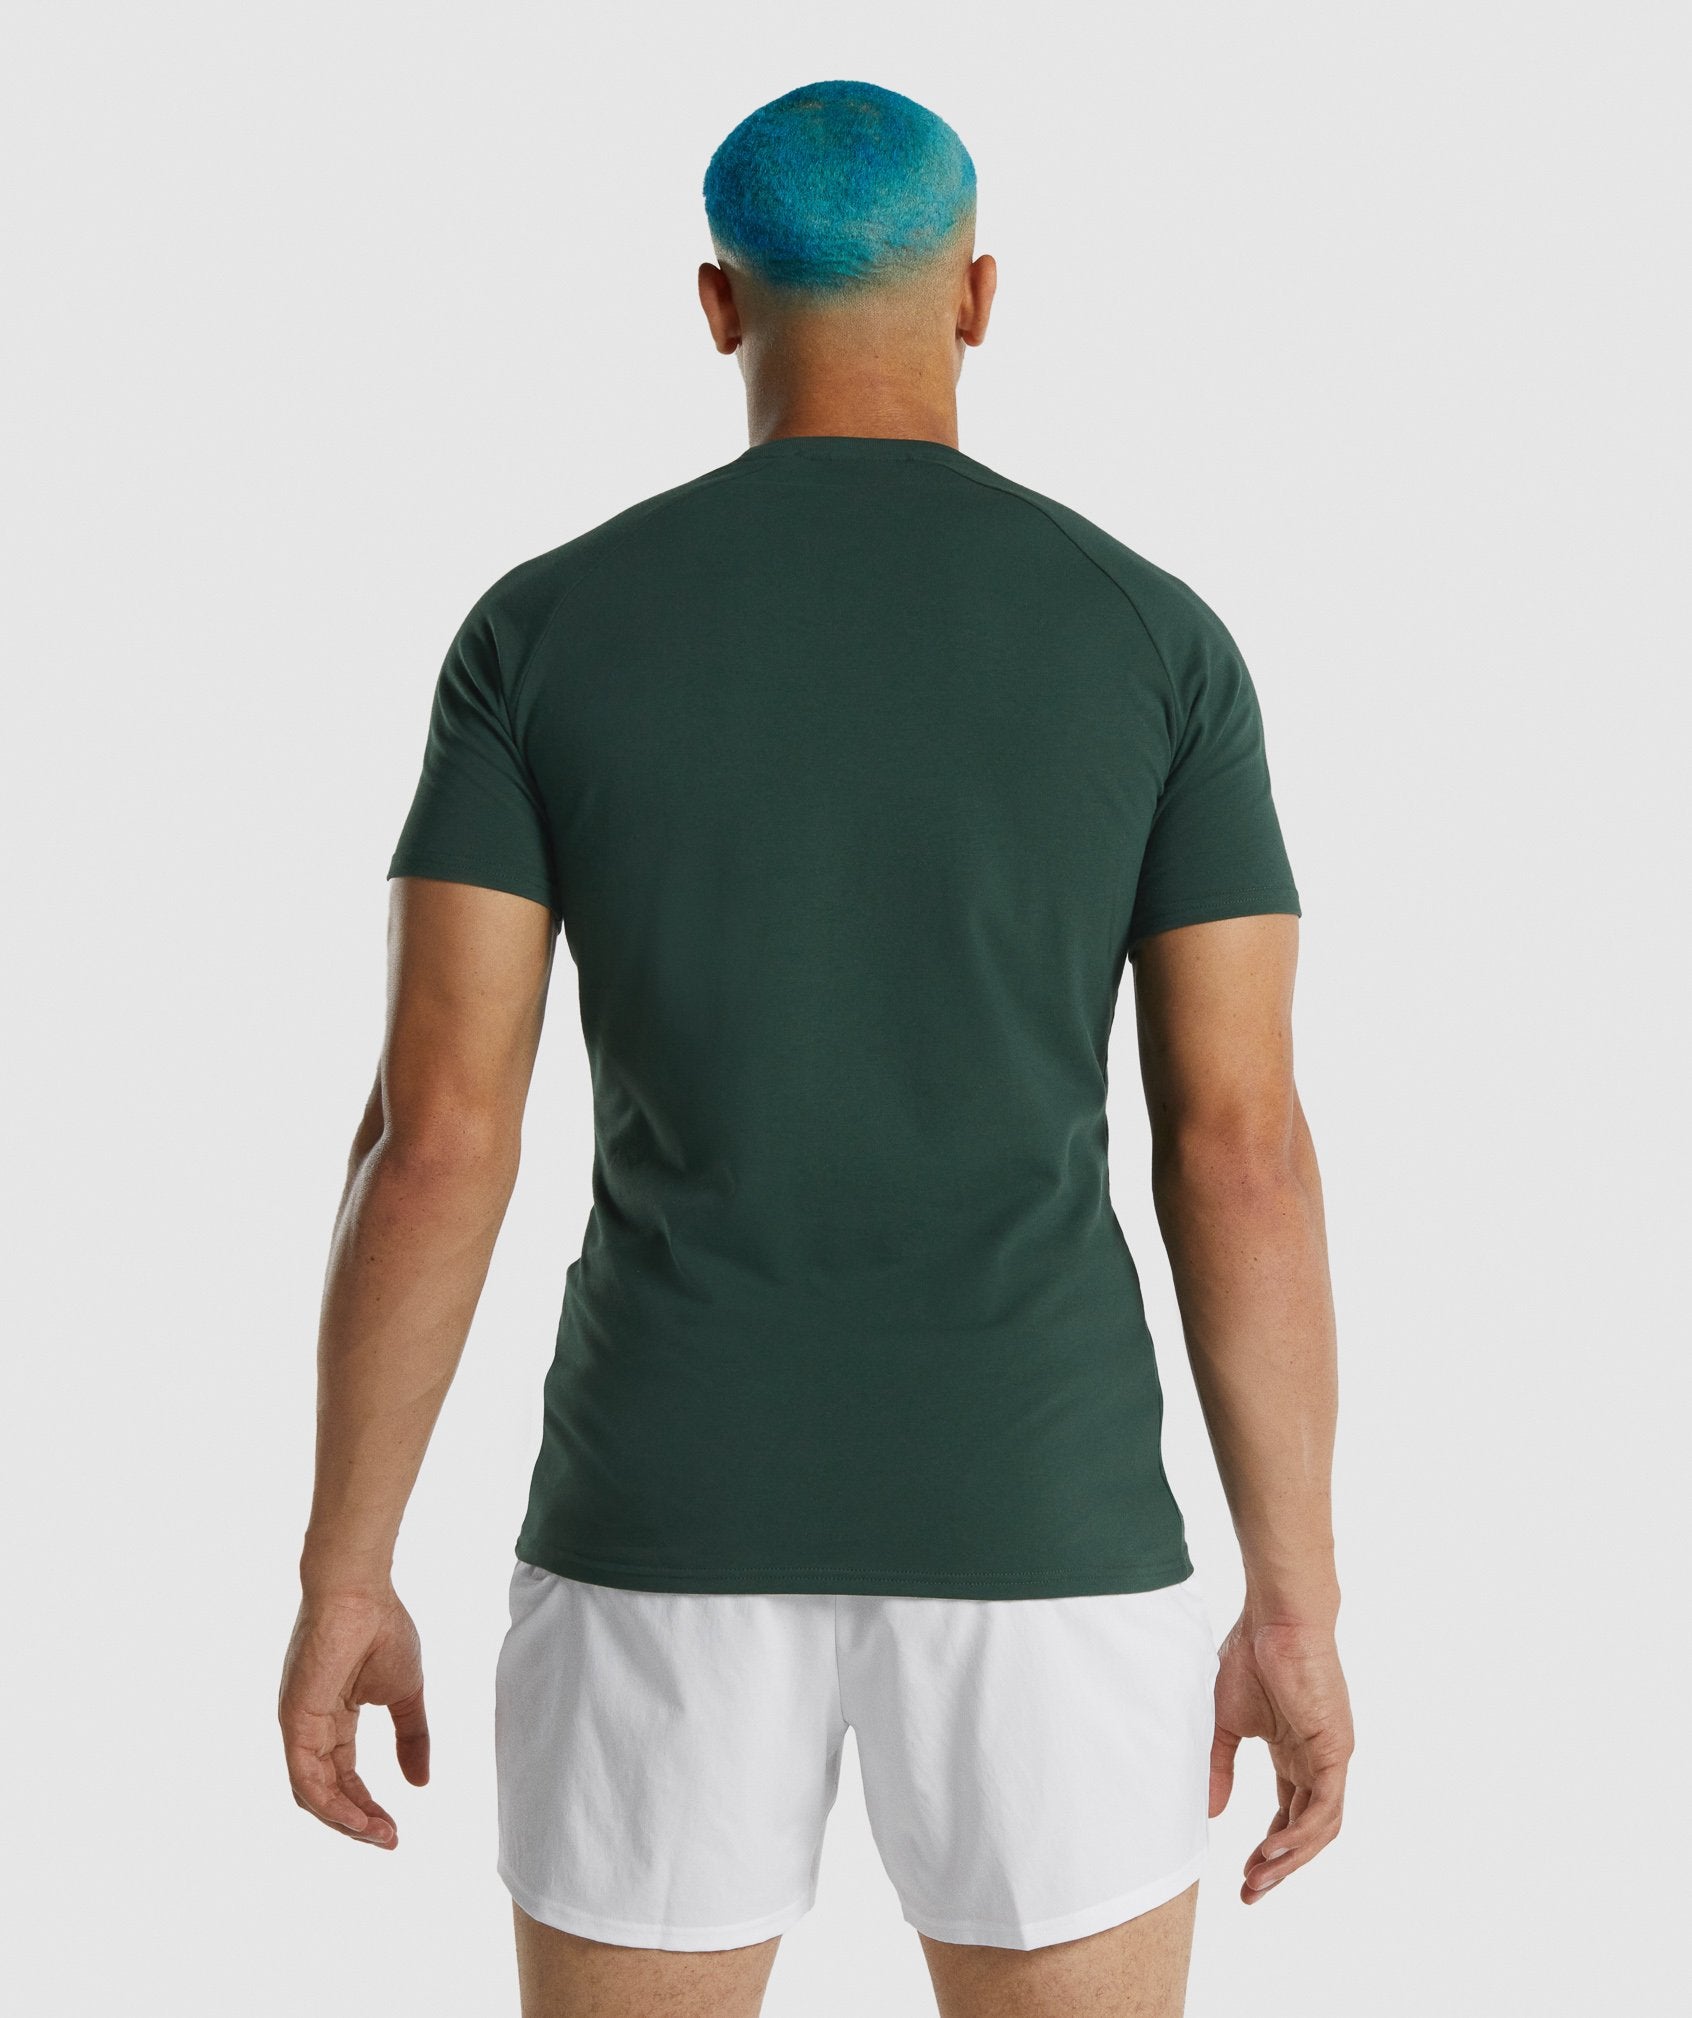 Apollo T-Shirt in Dark Green - view 3